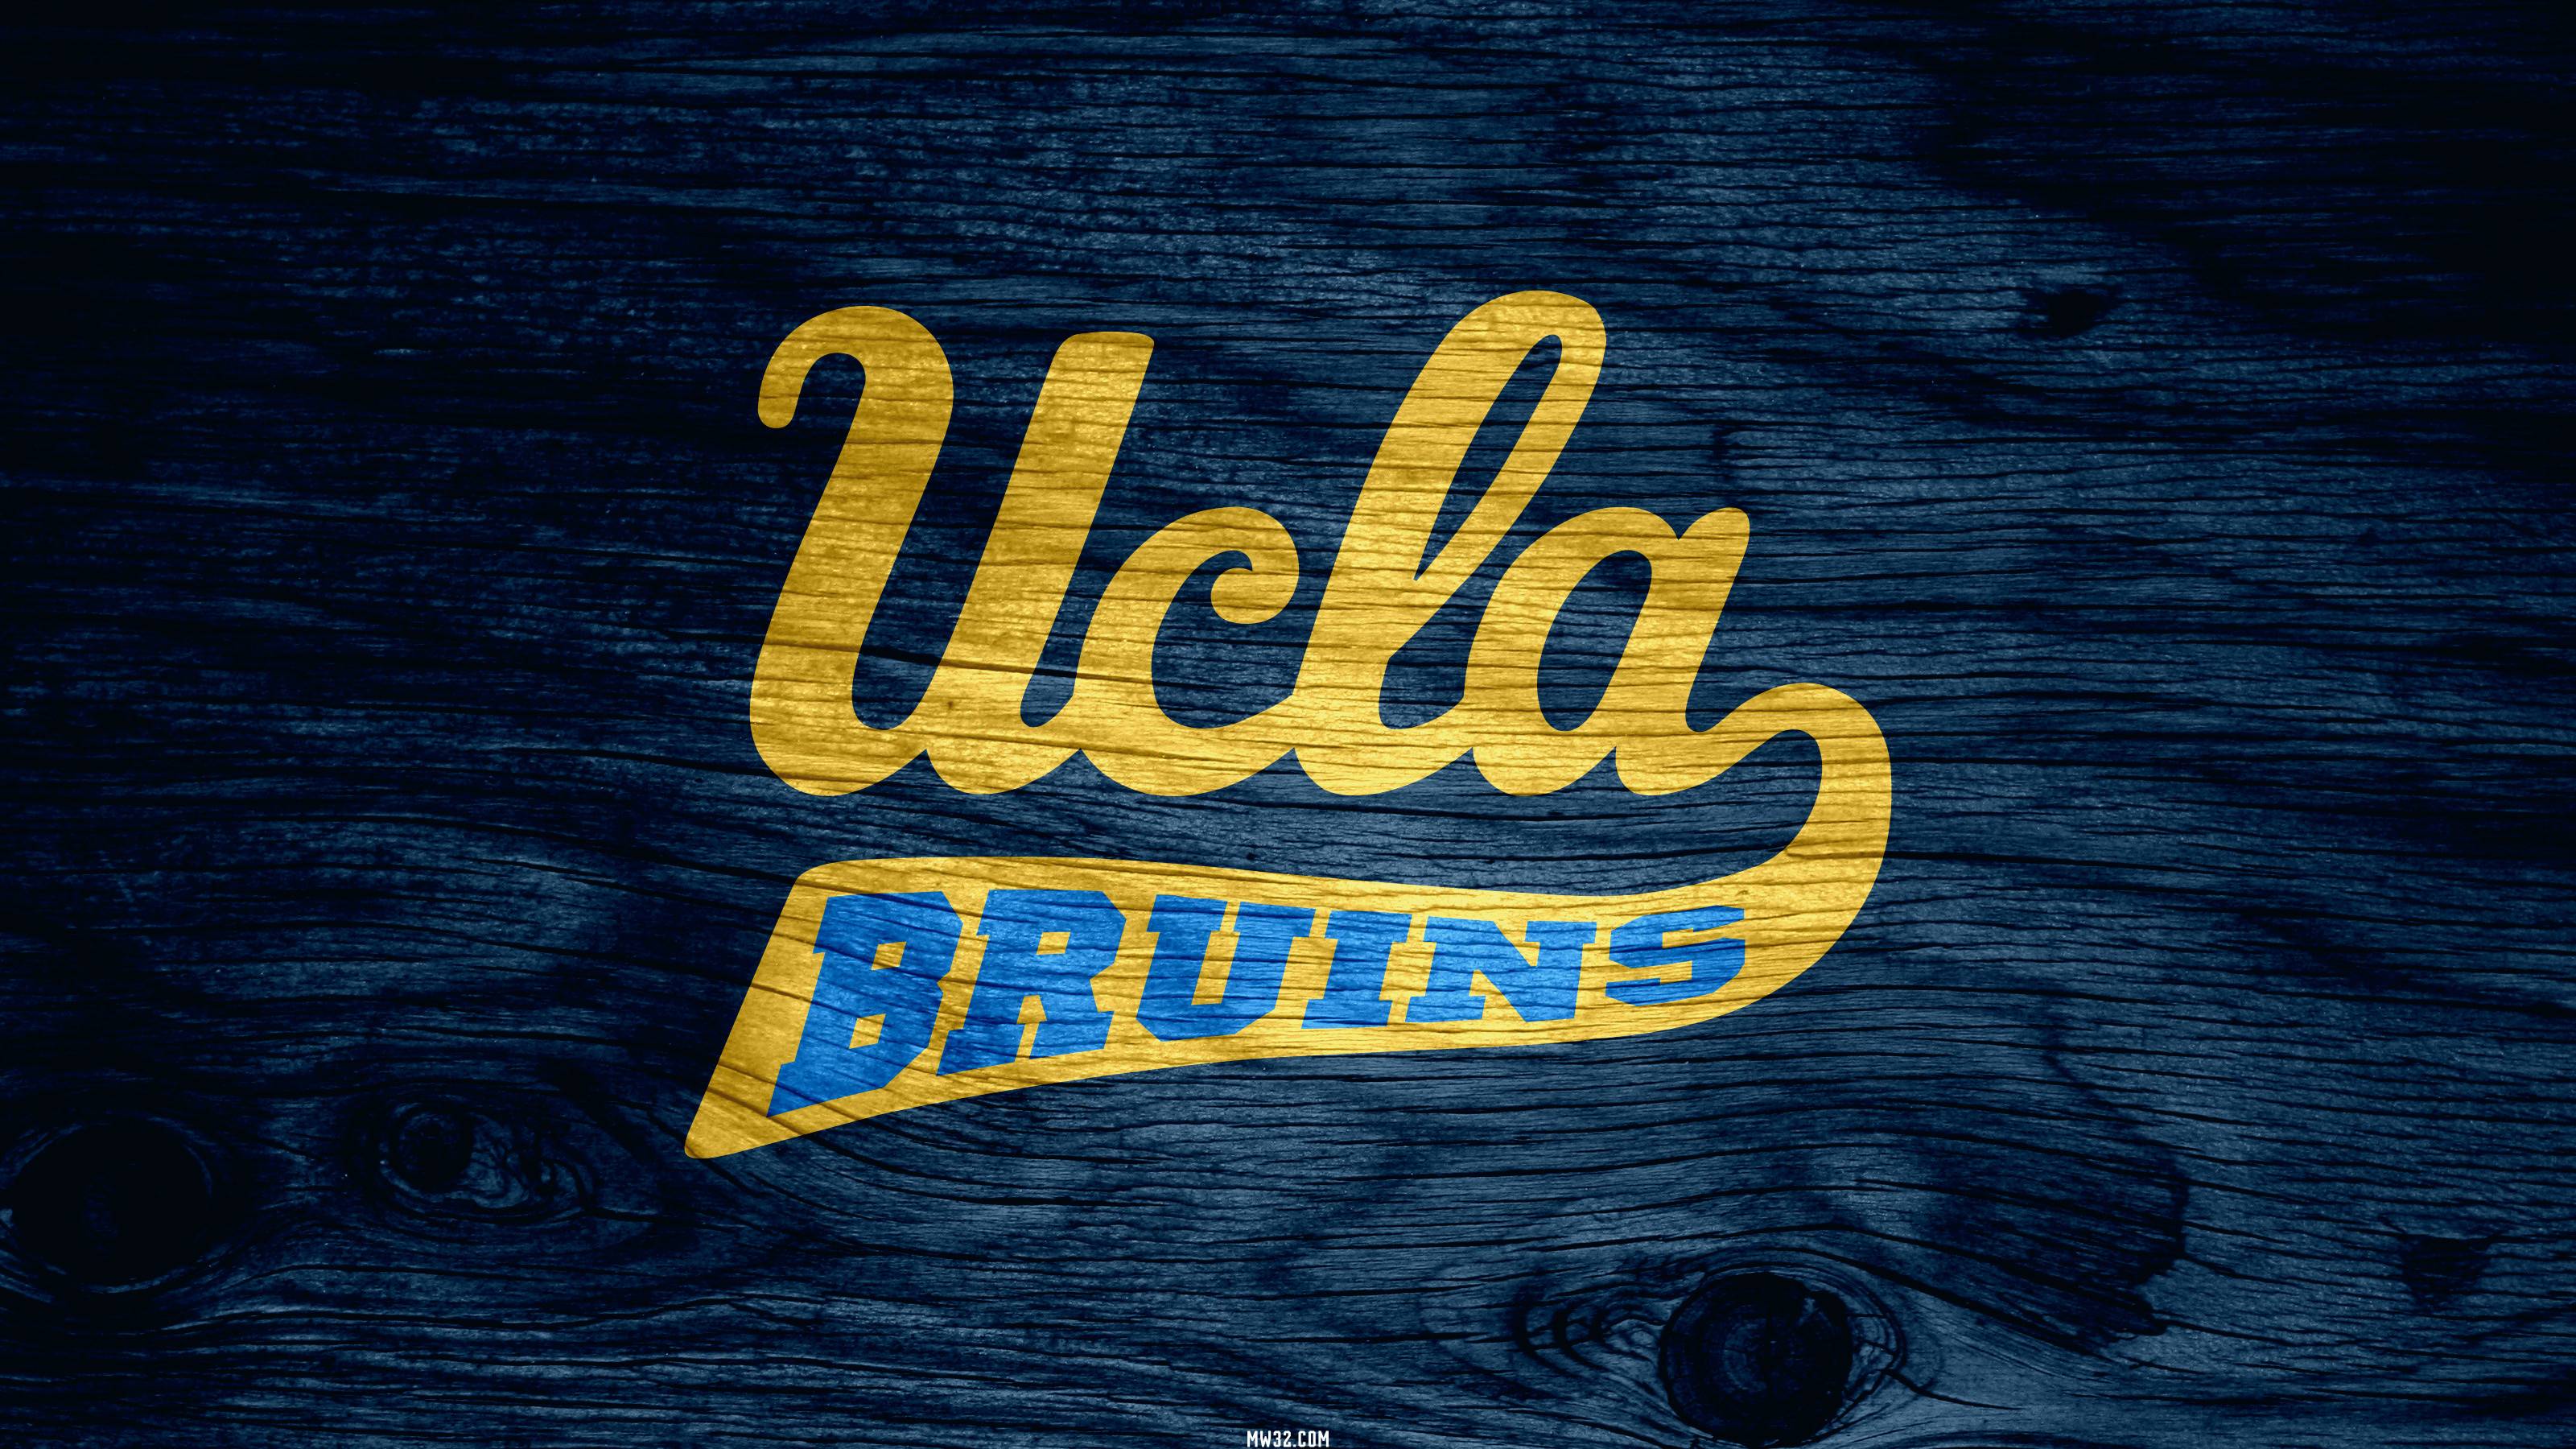 UCLA Bruins Football Wallpaper by sircle on DeviantArt